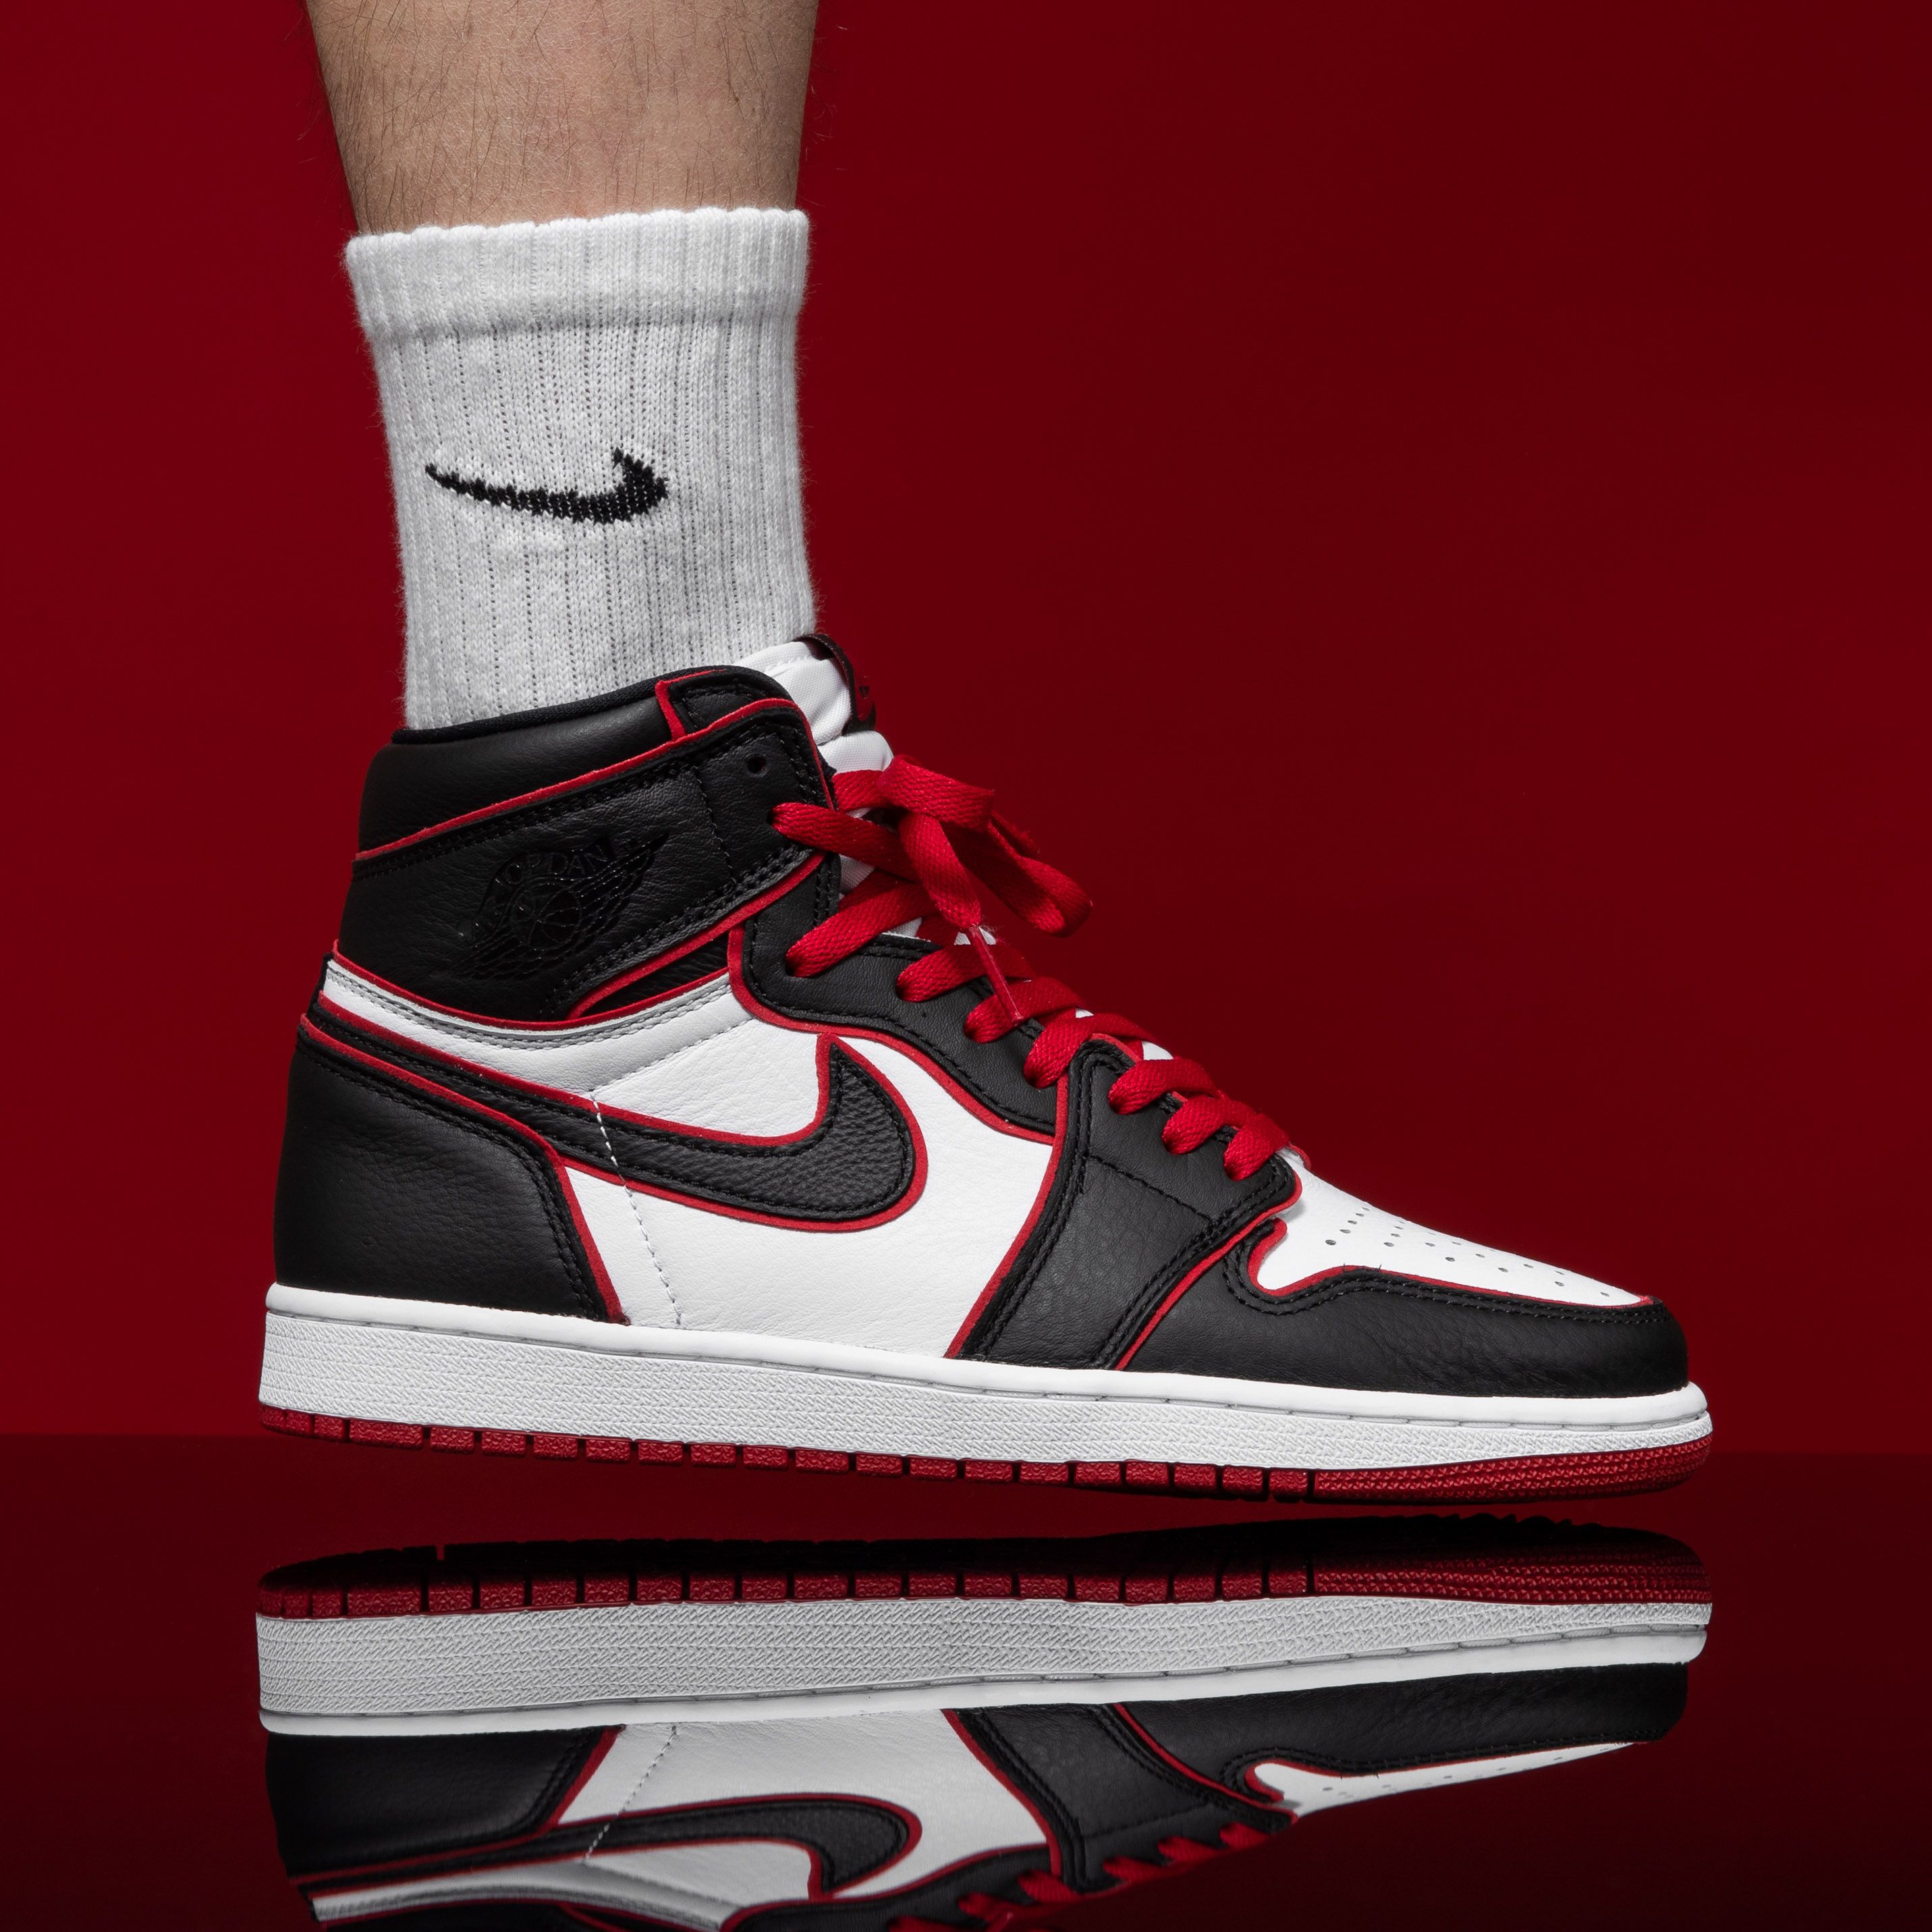 Джорданы лов. Nike Air Jordan 1 Retro Bloodline. Nike Air Jordan 1 og Bloodline. Nike Air Jordan 1 High og Bloodline. Nike Air Jordan 1 Bloodline.